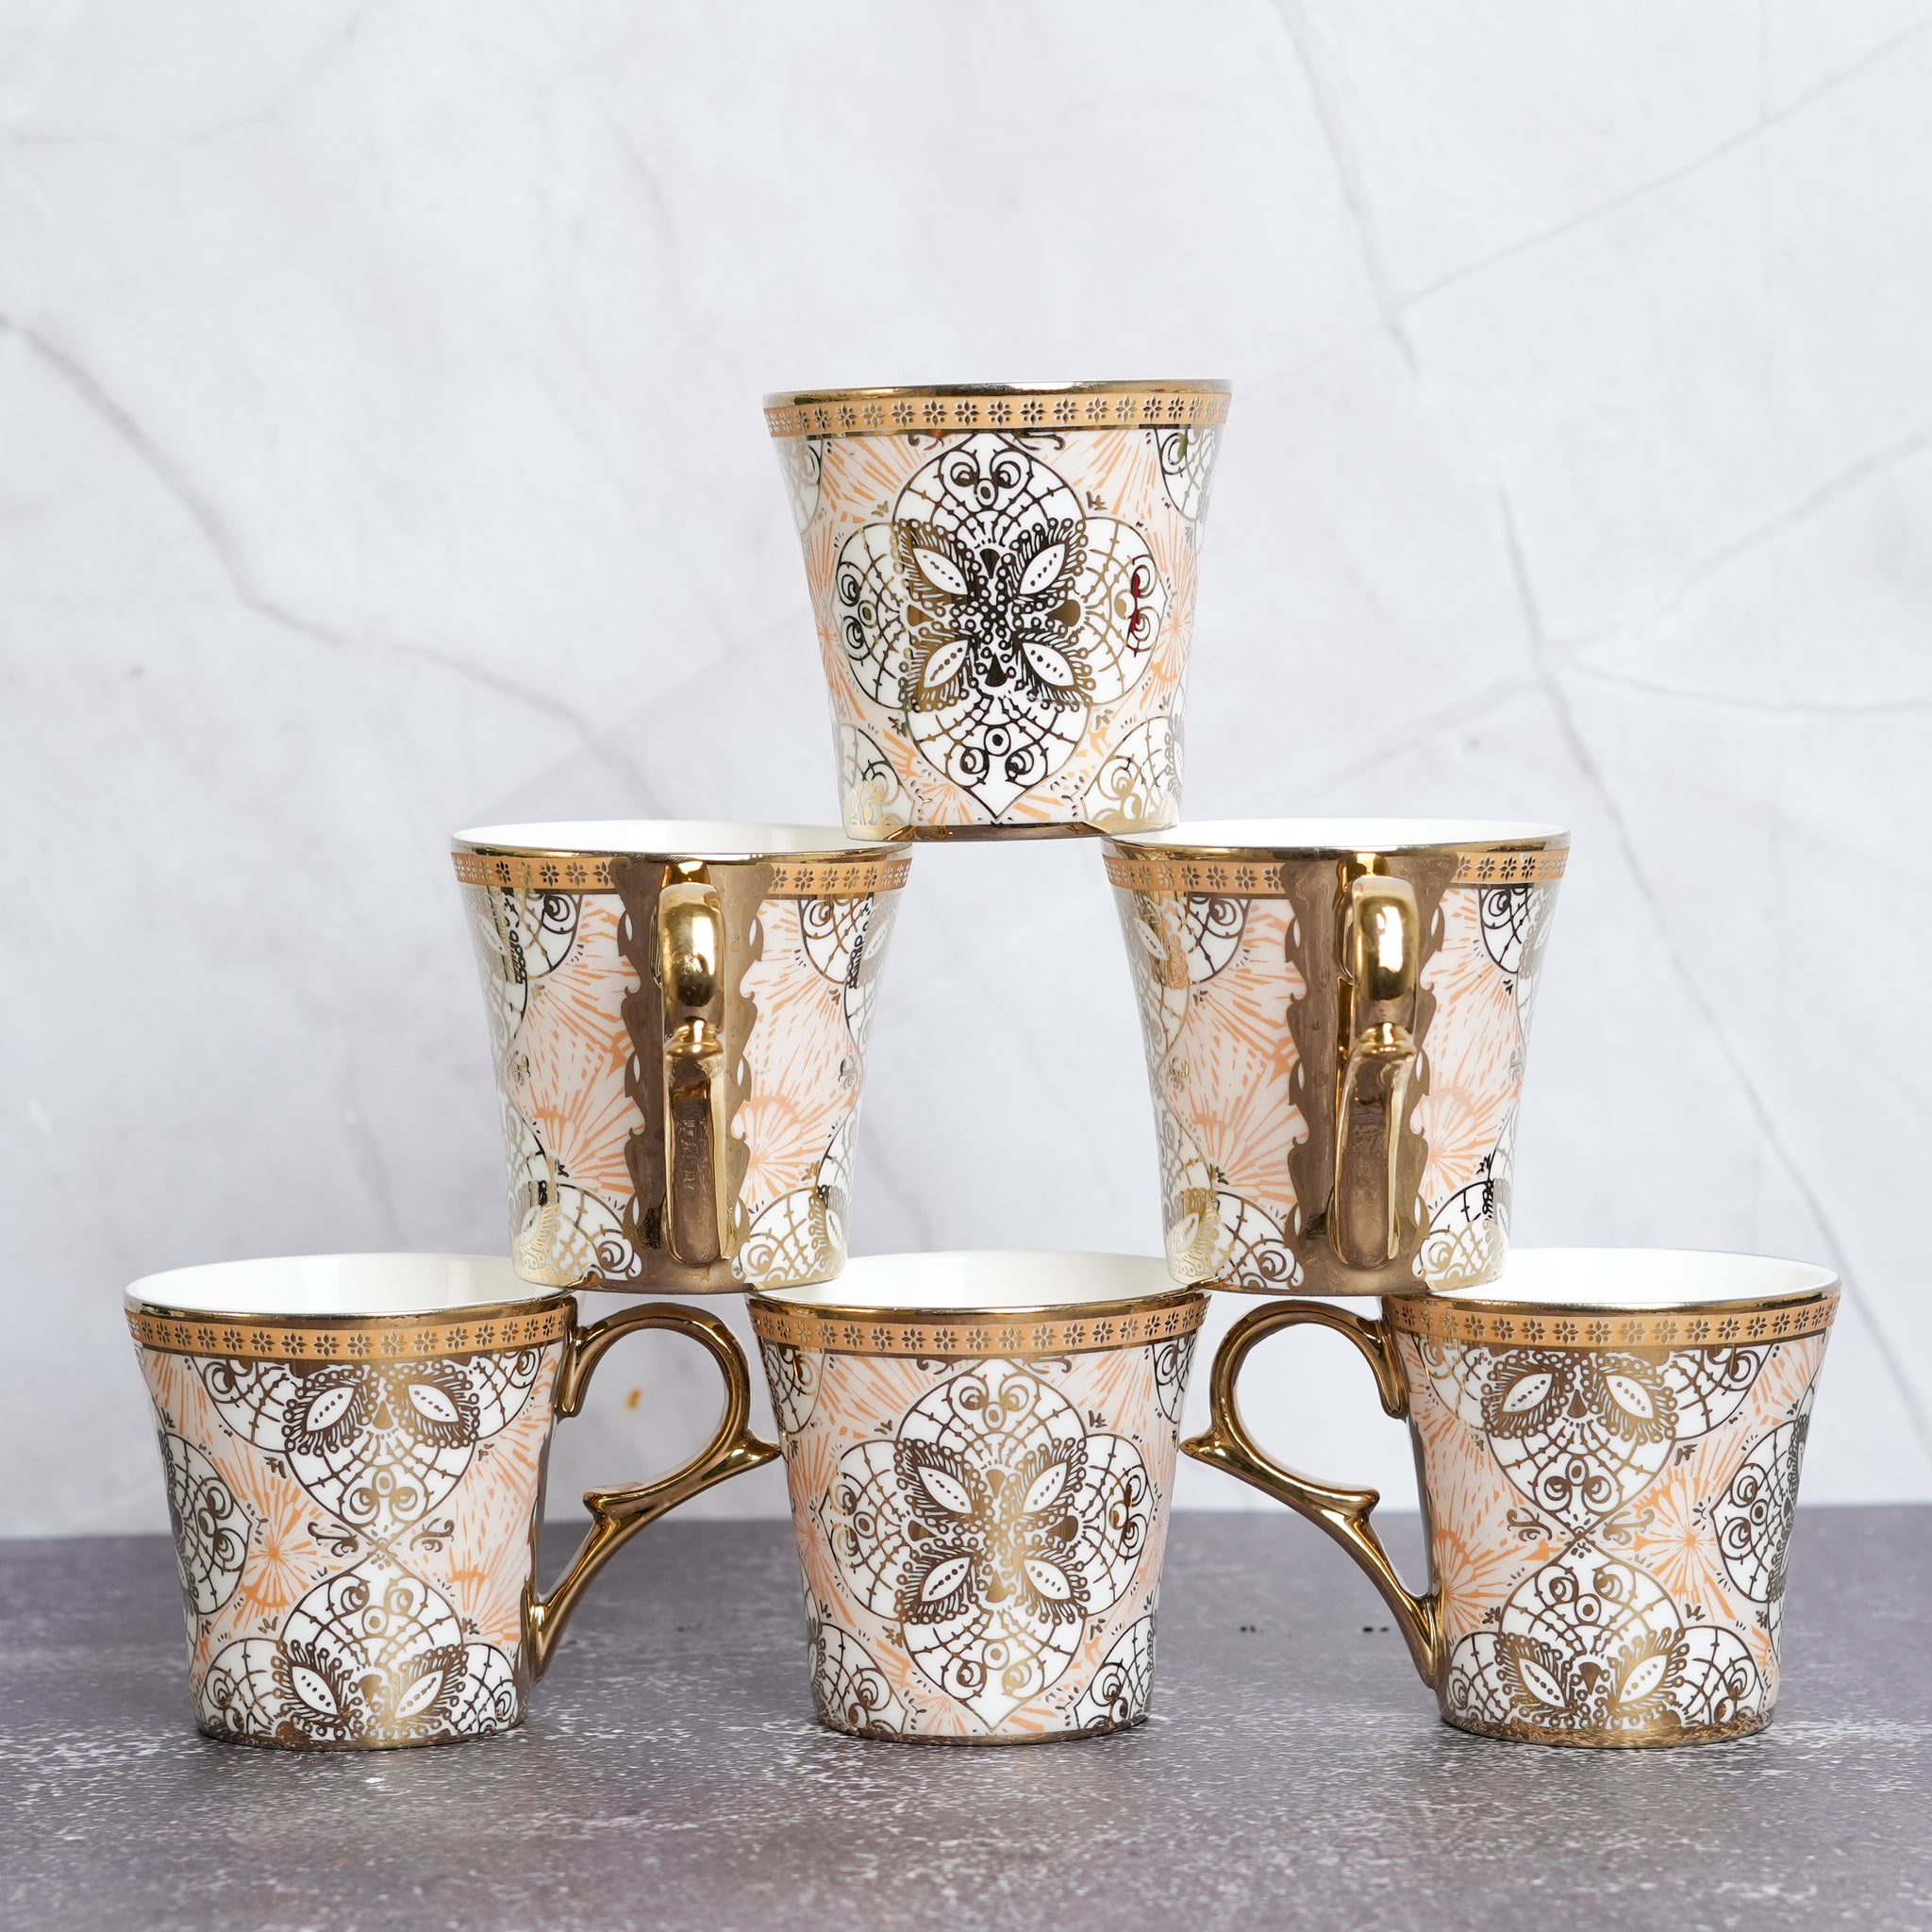 Femora Ethnic Desert Sand Gold Ceramic Tea and Coffee Mugs, (180 ml, Golden) - 6 Pcs Set (NOT Microwave Safe)